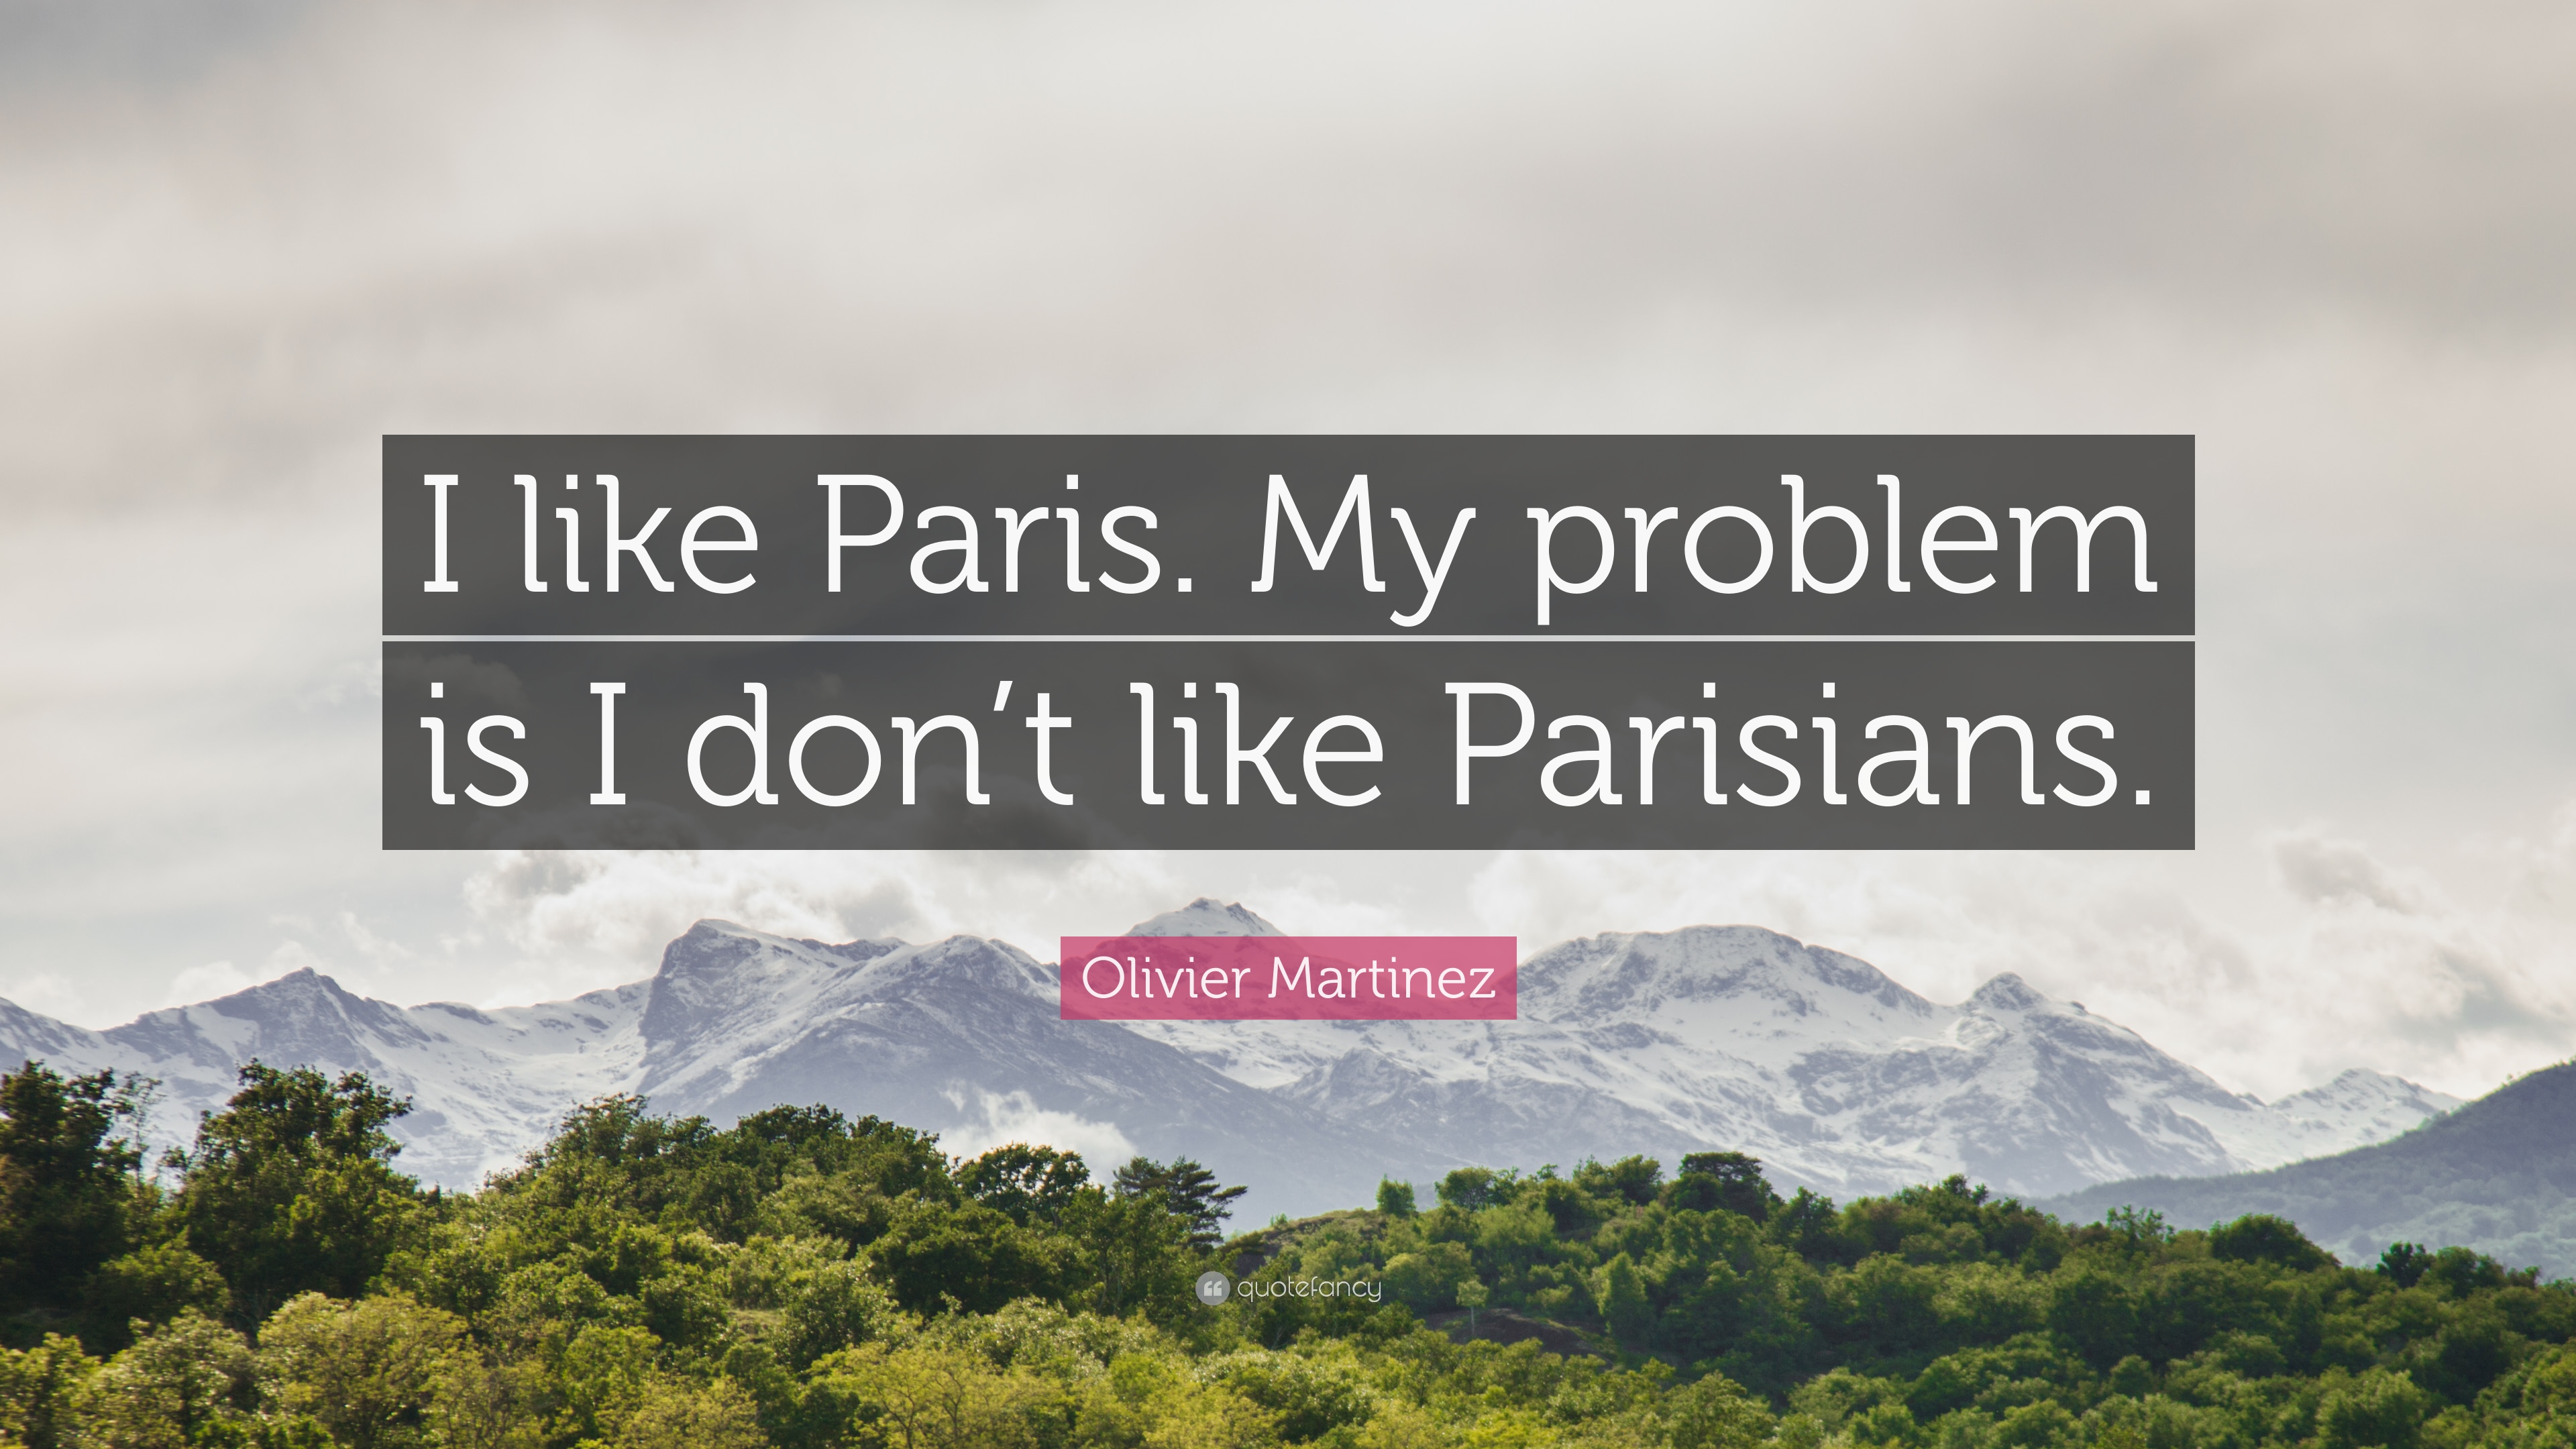 Olivier Martinez Quote: “I like Paris. My problem is I don't like